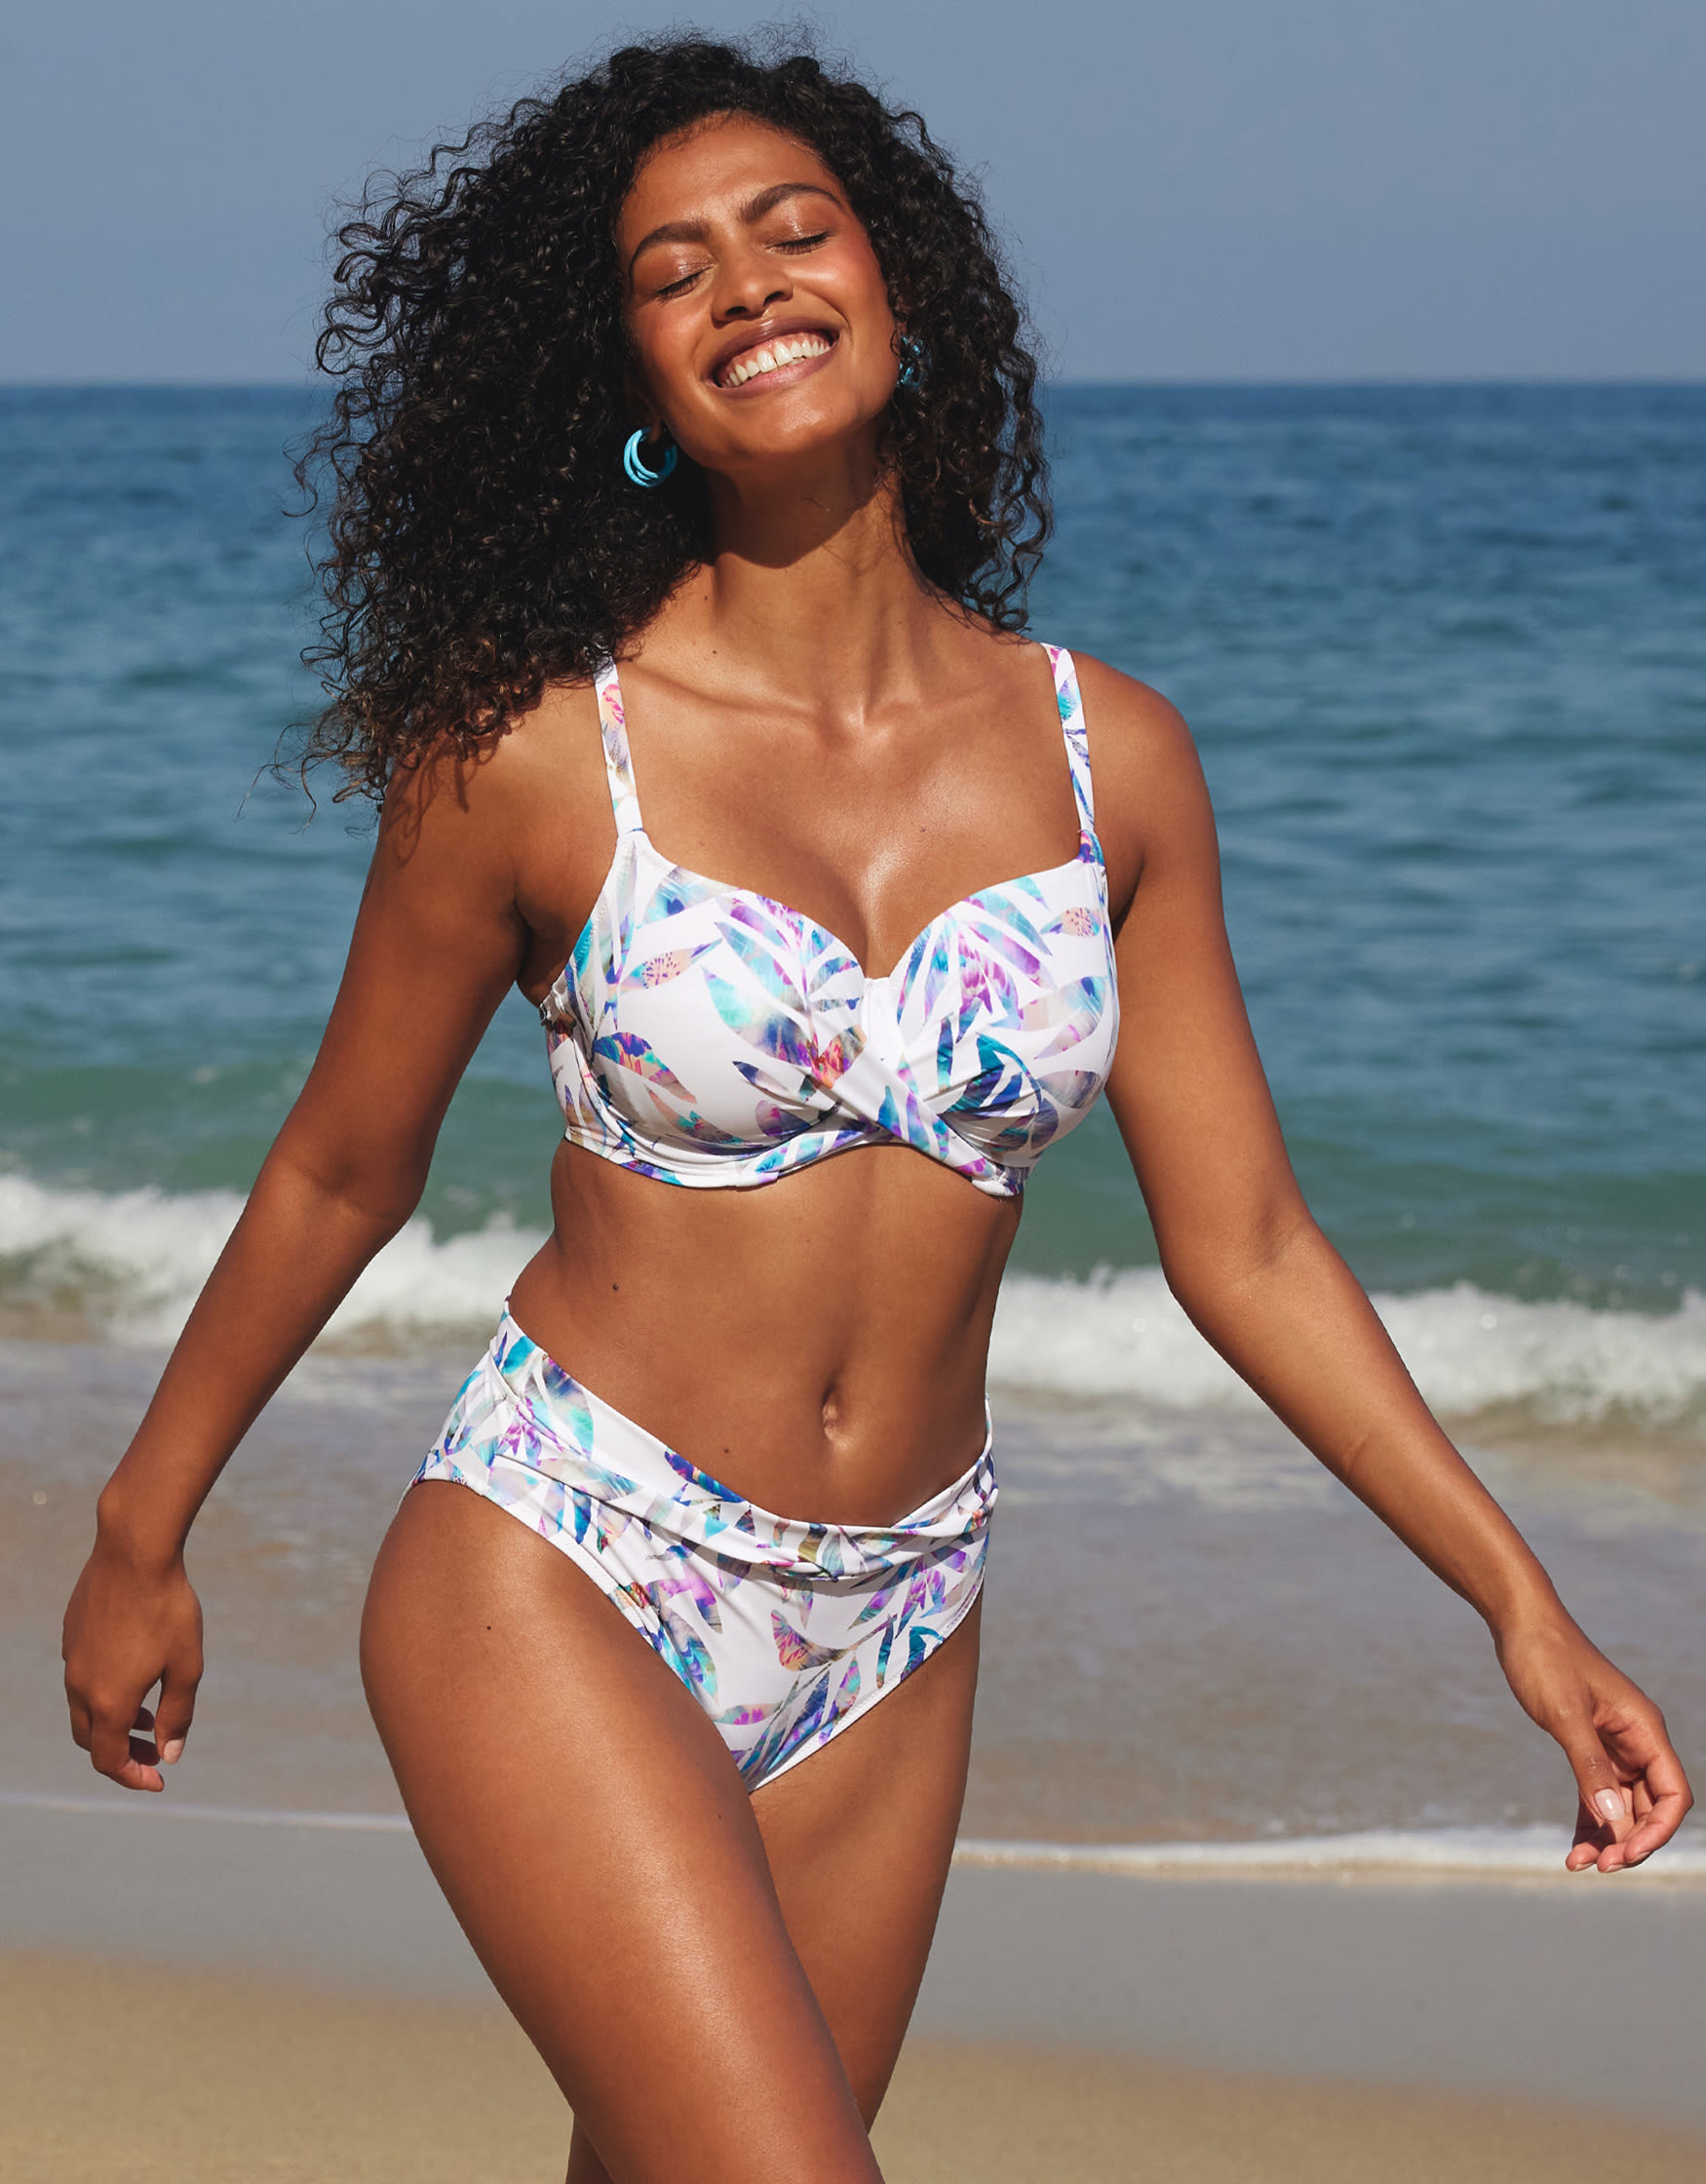 Calypso Harbour Full Cup Bikini Top – Sheer Essentials Lingerie & Swimwear